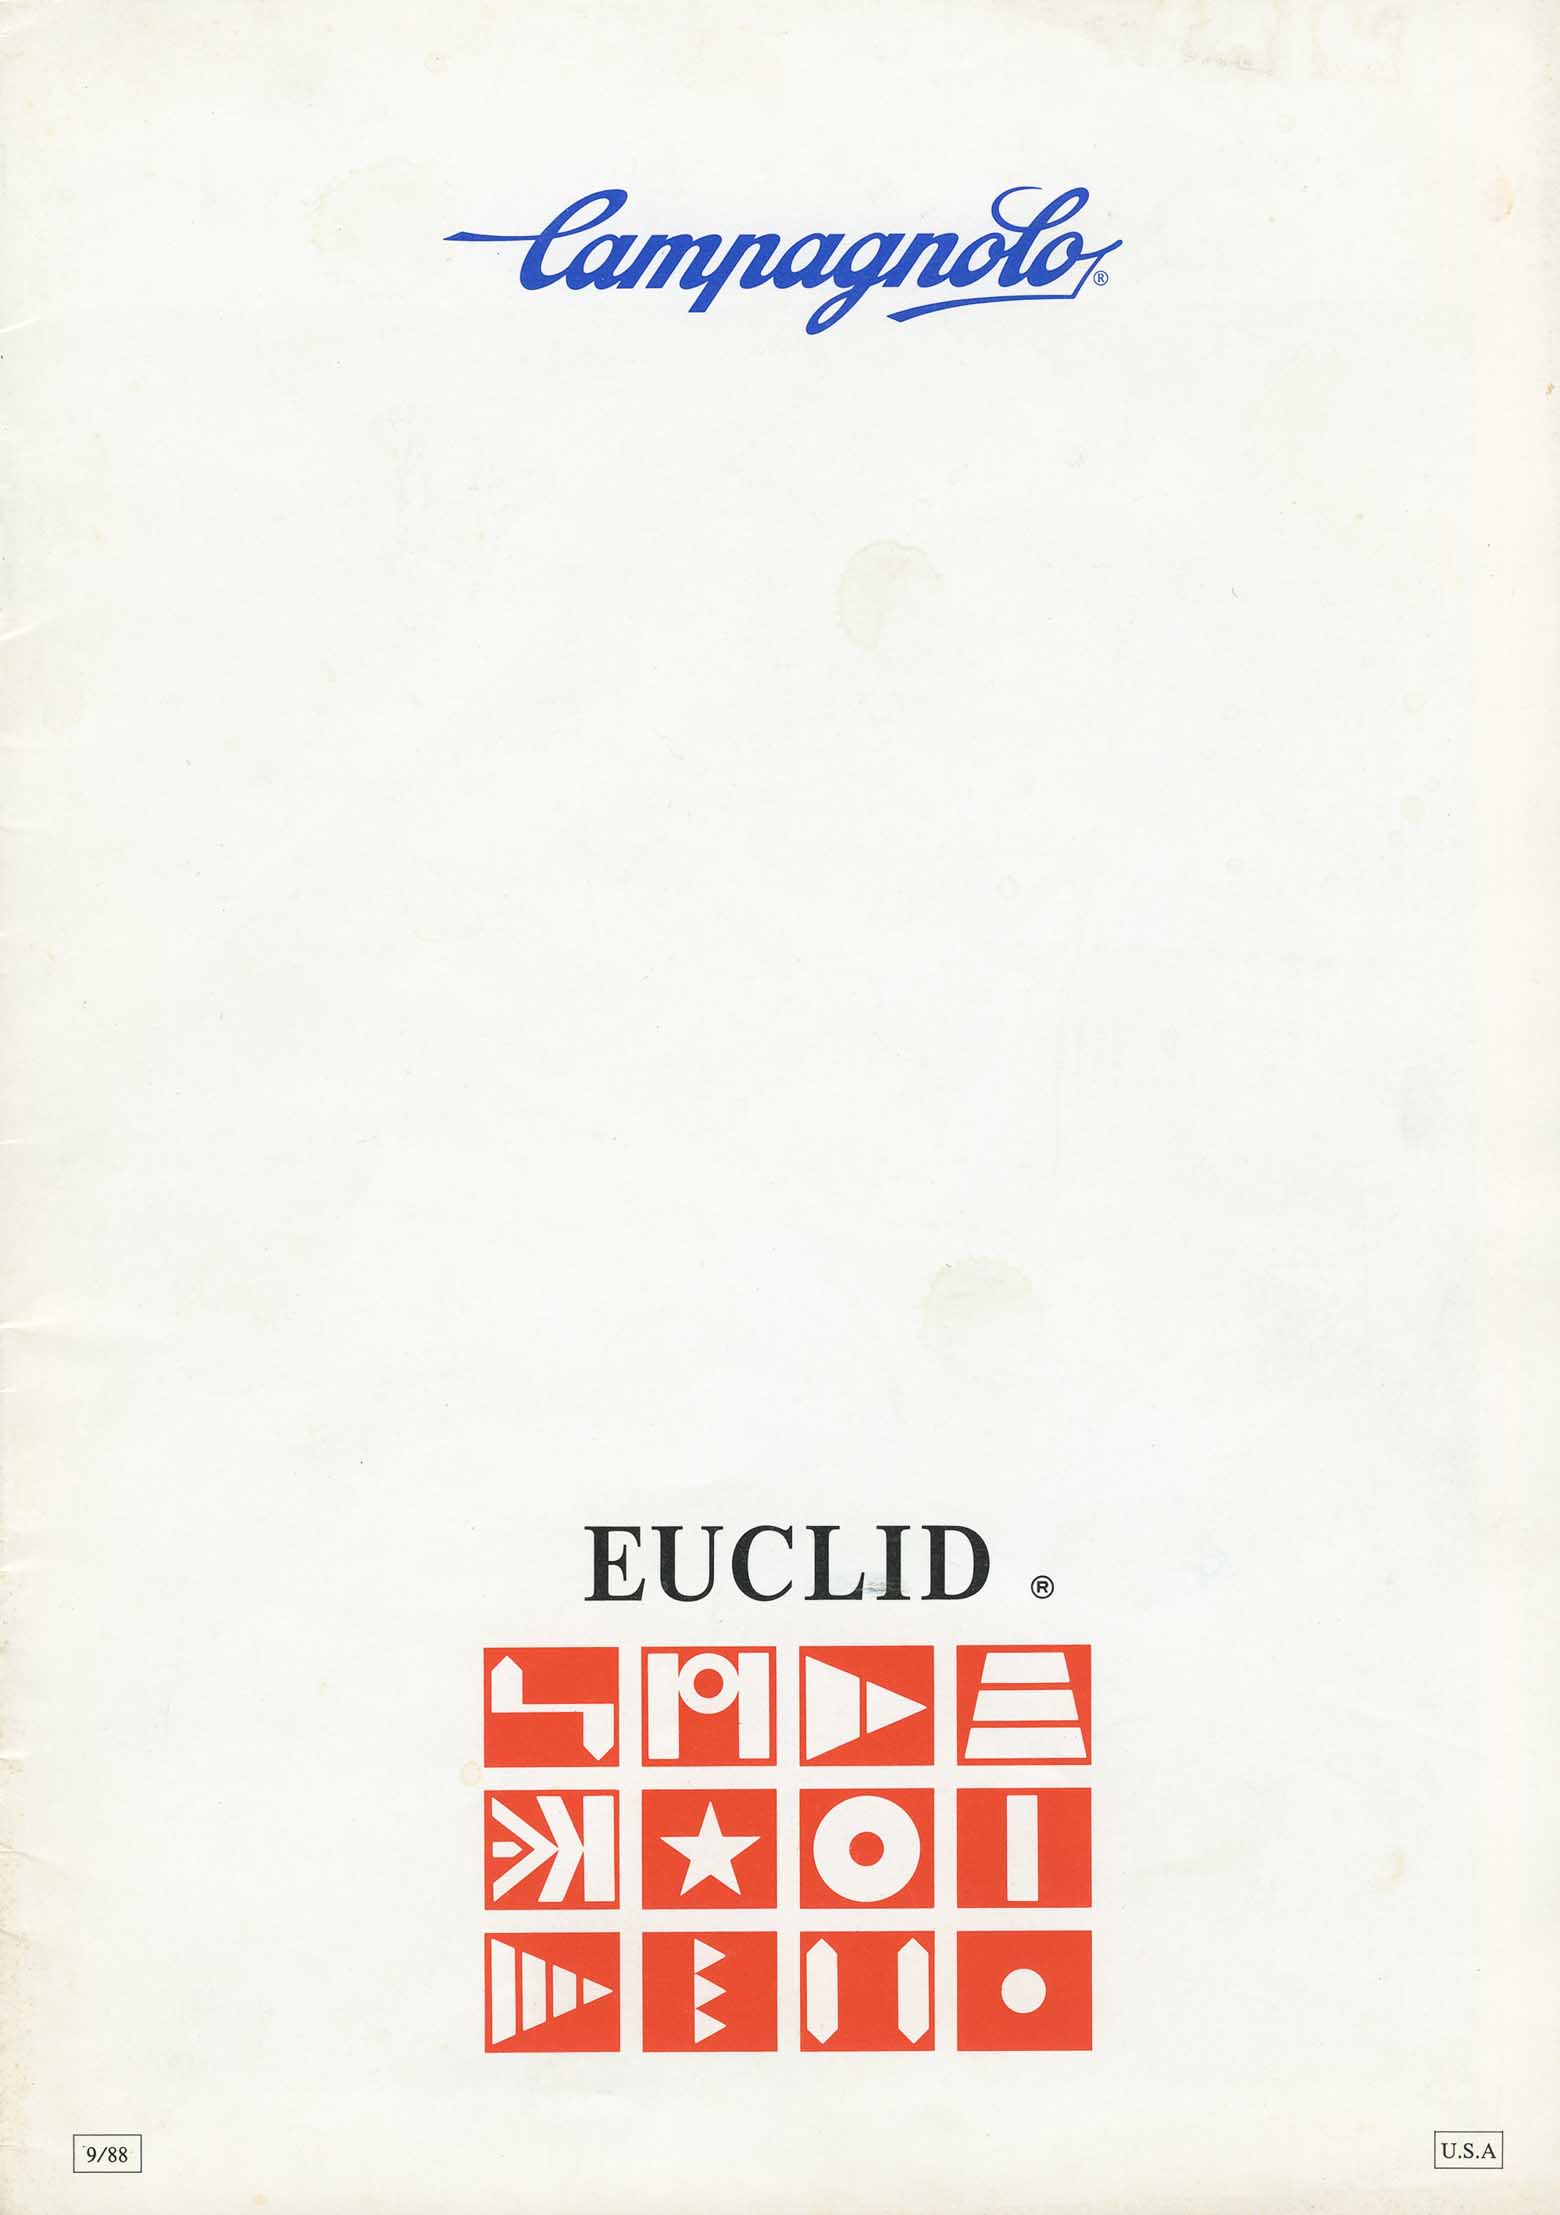 Campagnolo - Euclid scan 01 main image